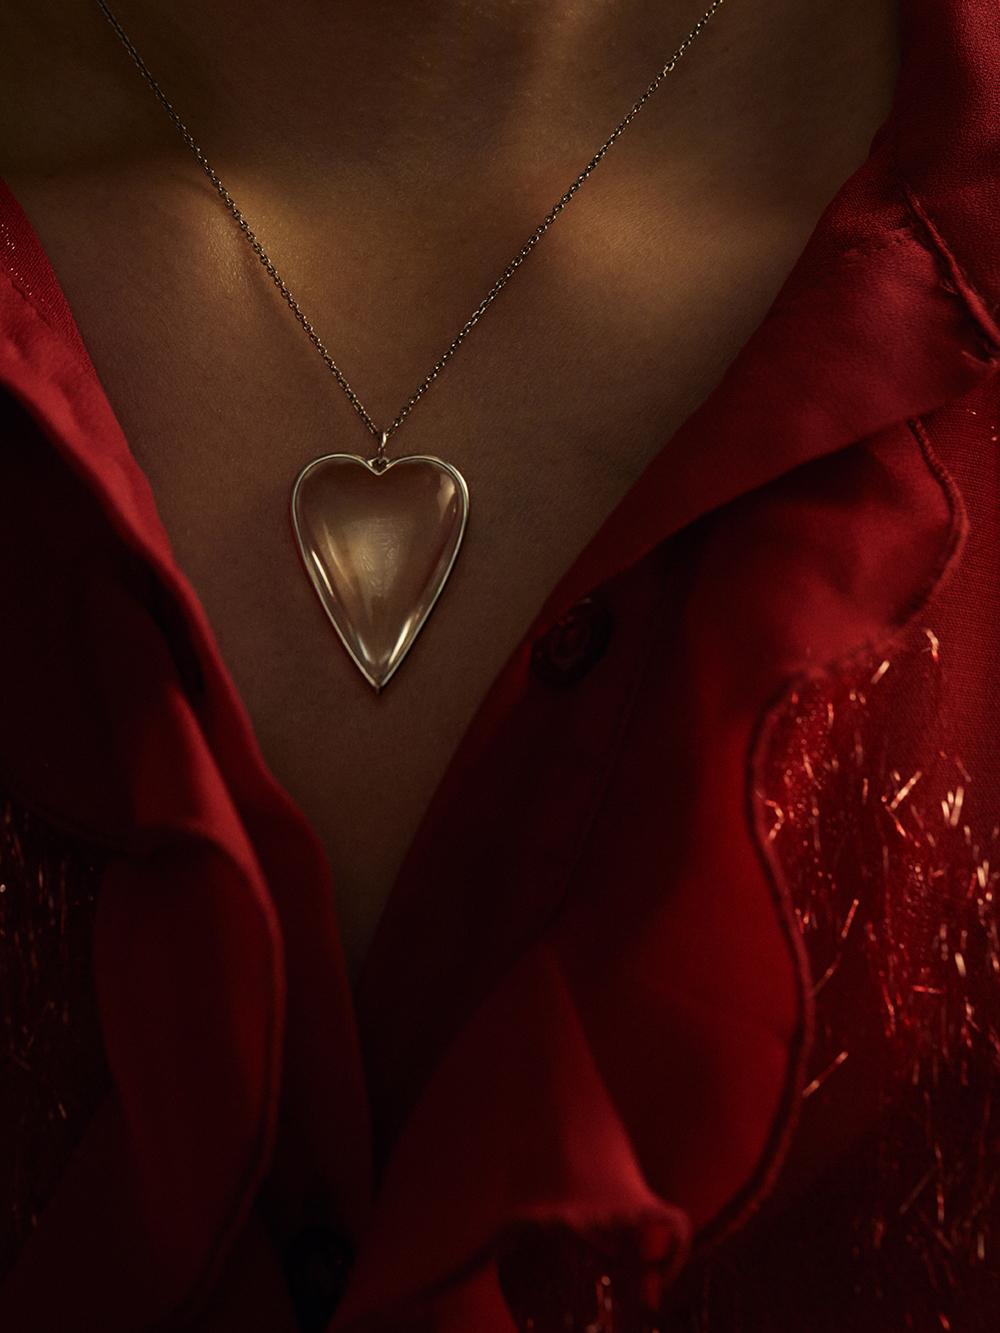 Rock Crystal Heart Pendant Necklace